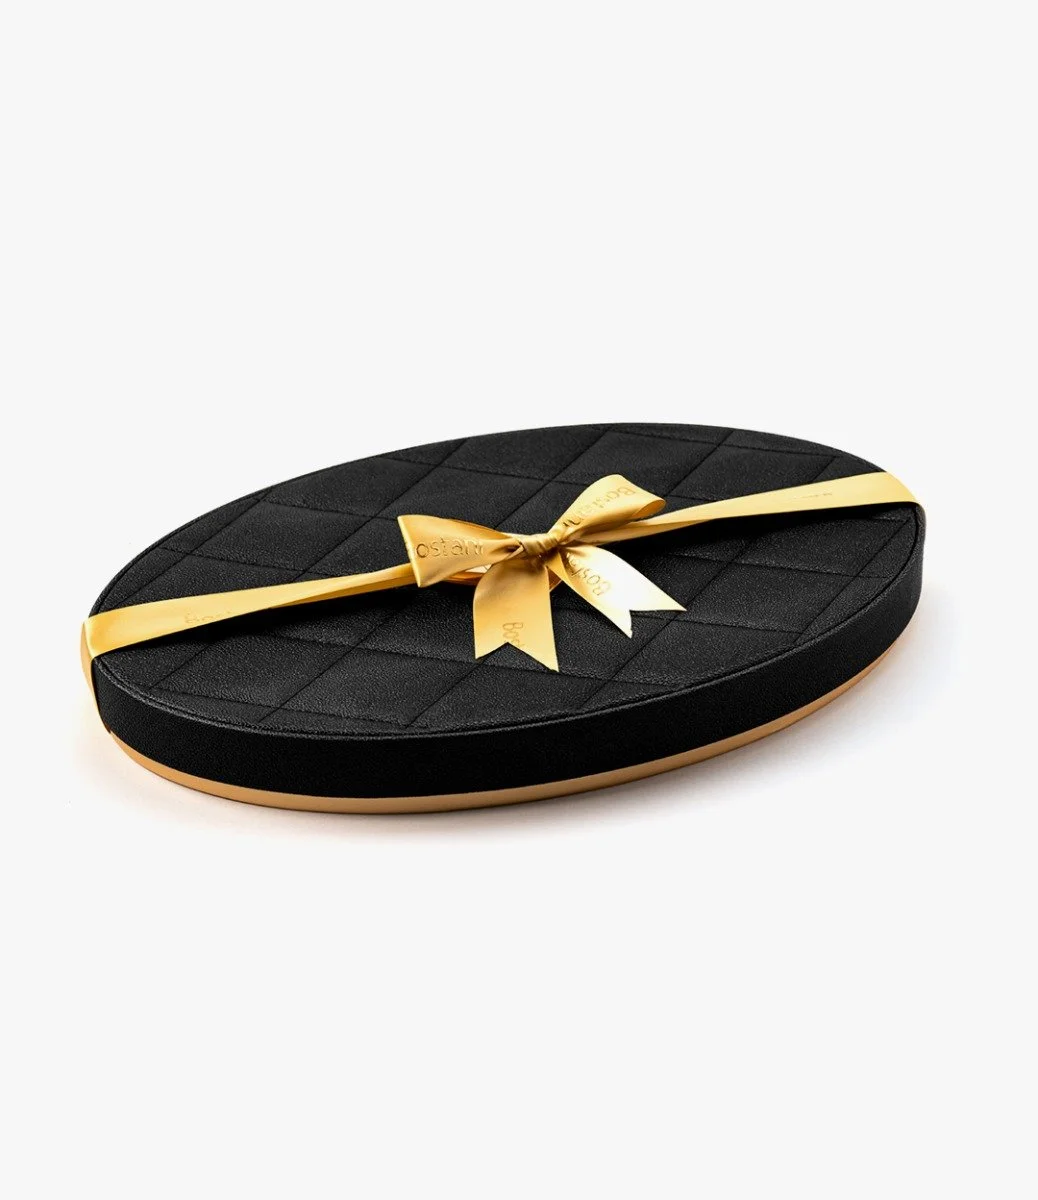 Oval Black Luxury Box By Bostani  - Big